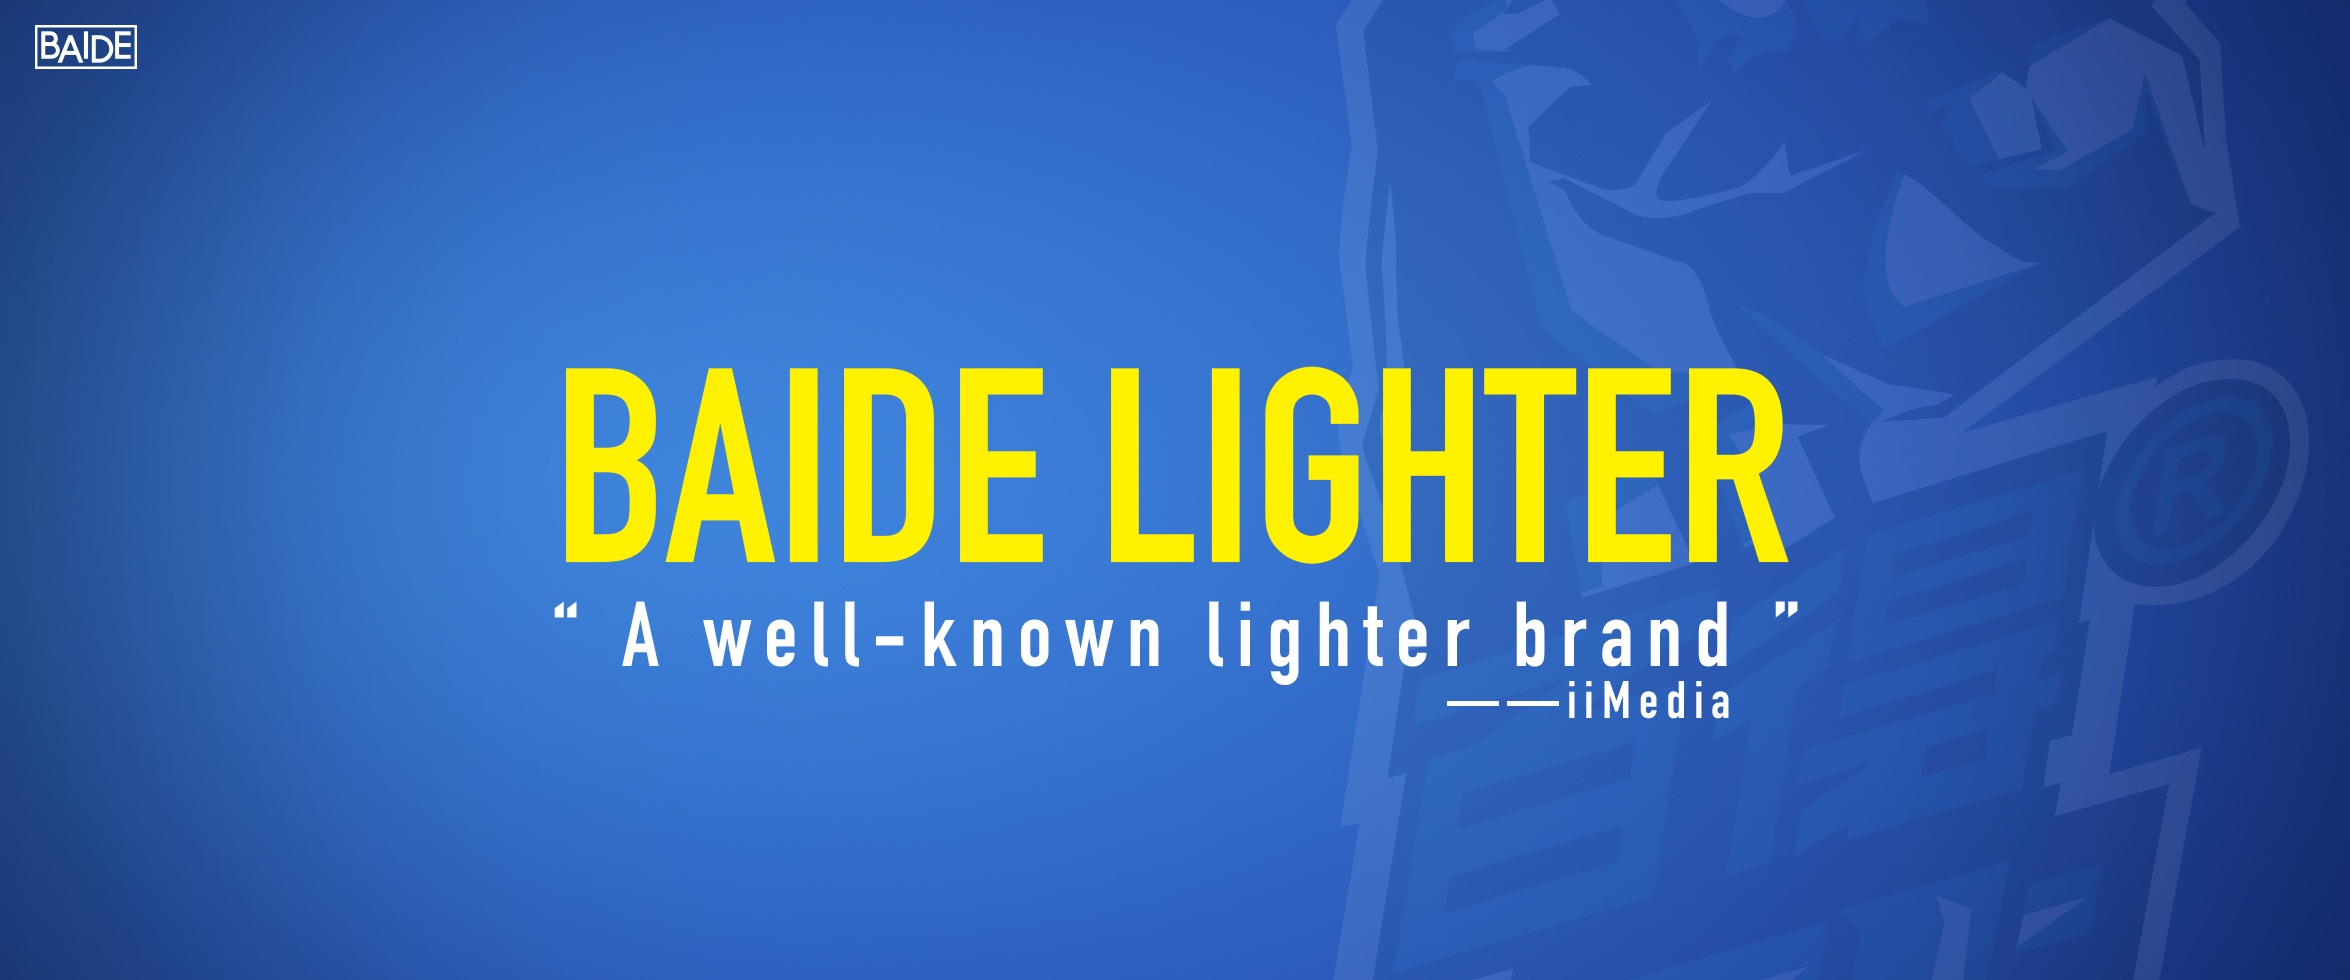 Baide Lighter  “ A well-known lighter brand ”——iiMedia